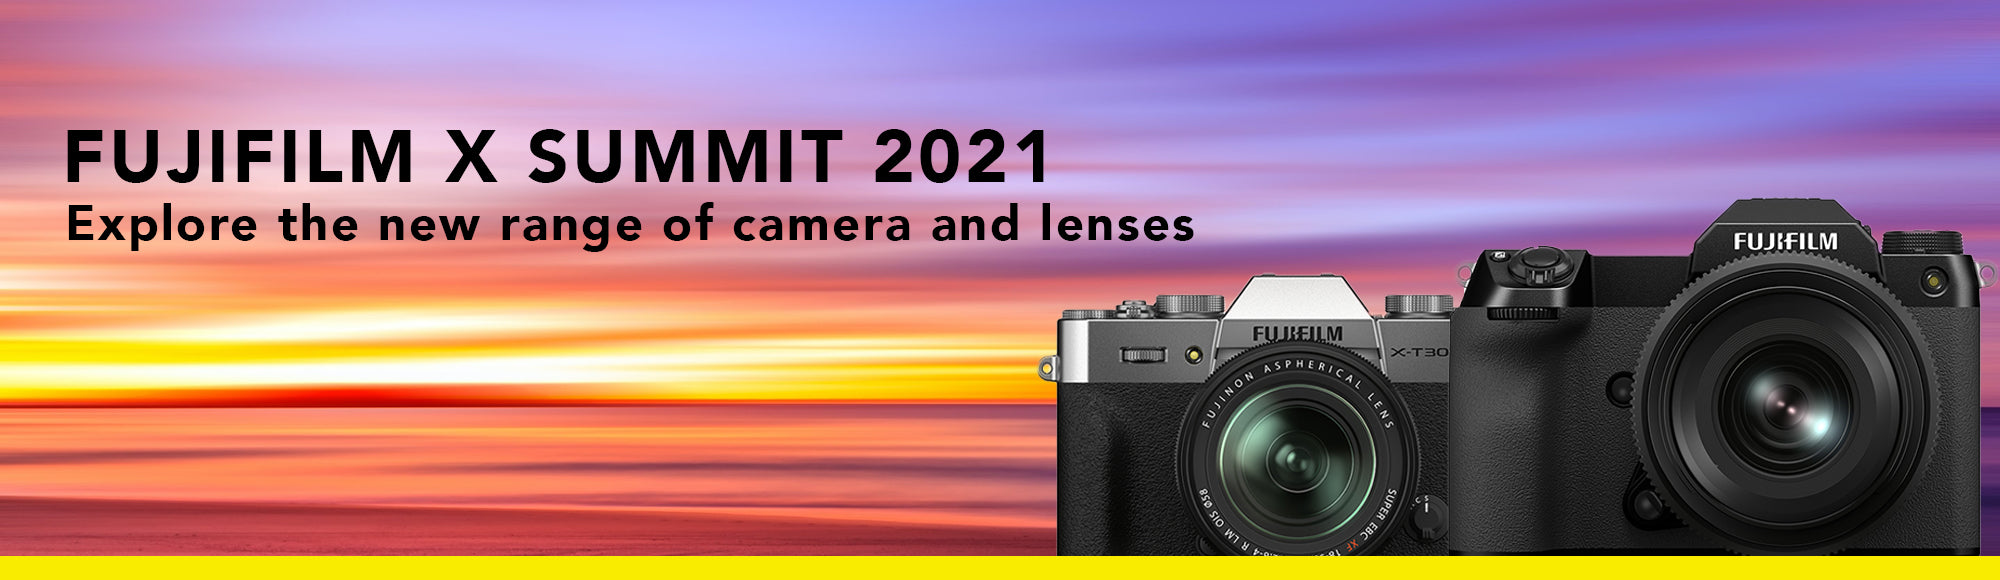 Fujifilm X Summit 2021